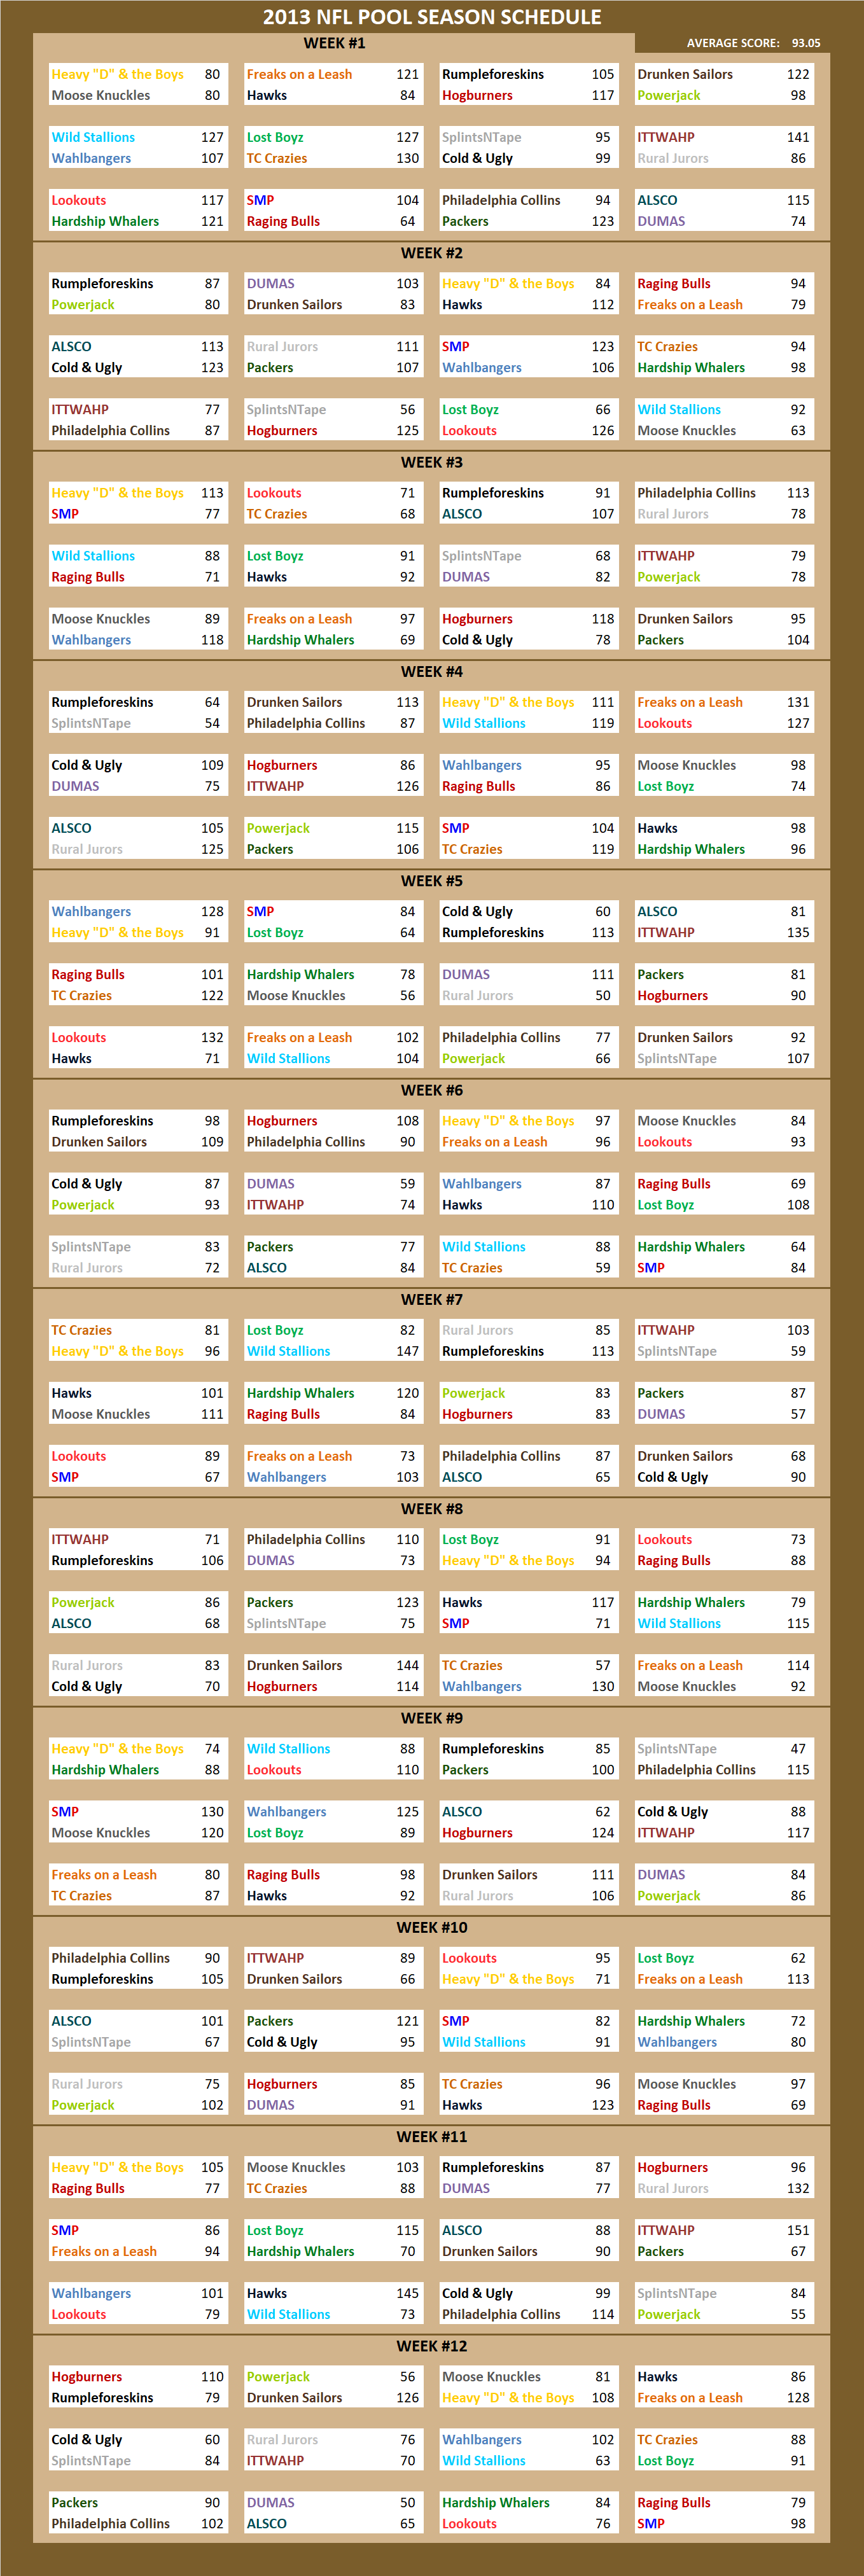 2013 National Football League Pool Season Schedule